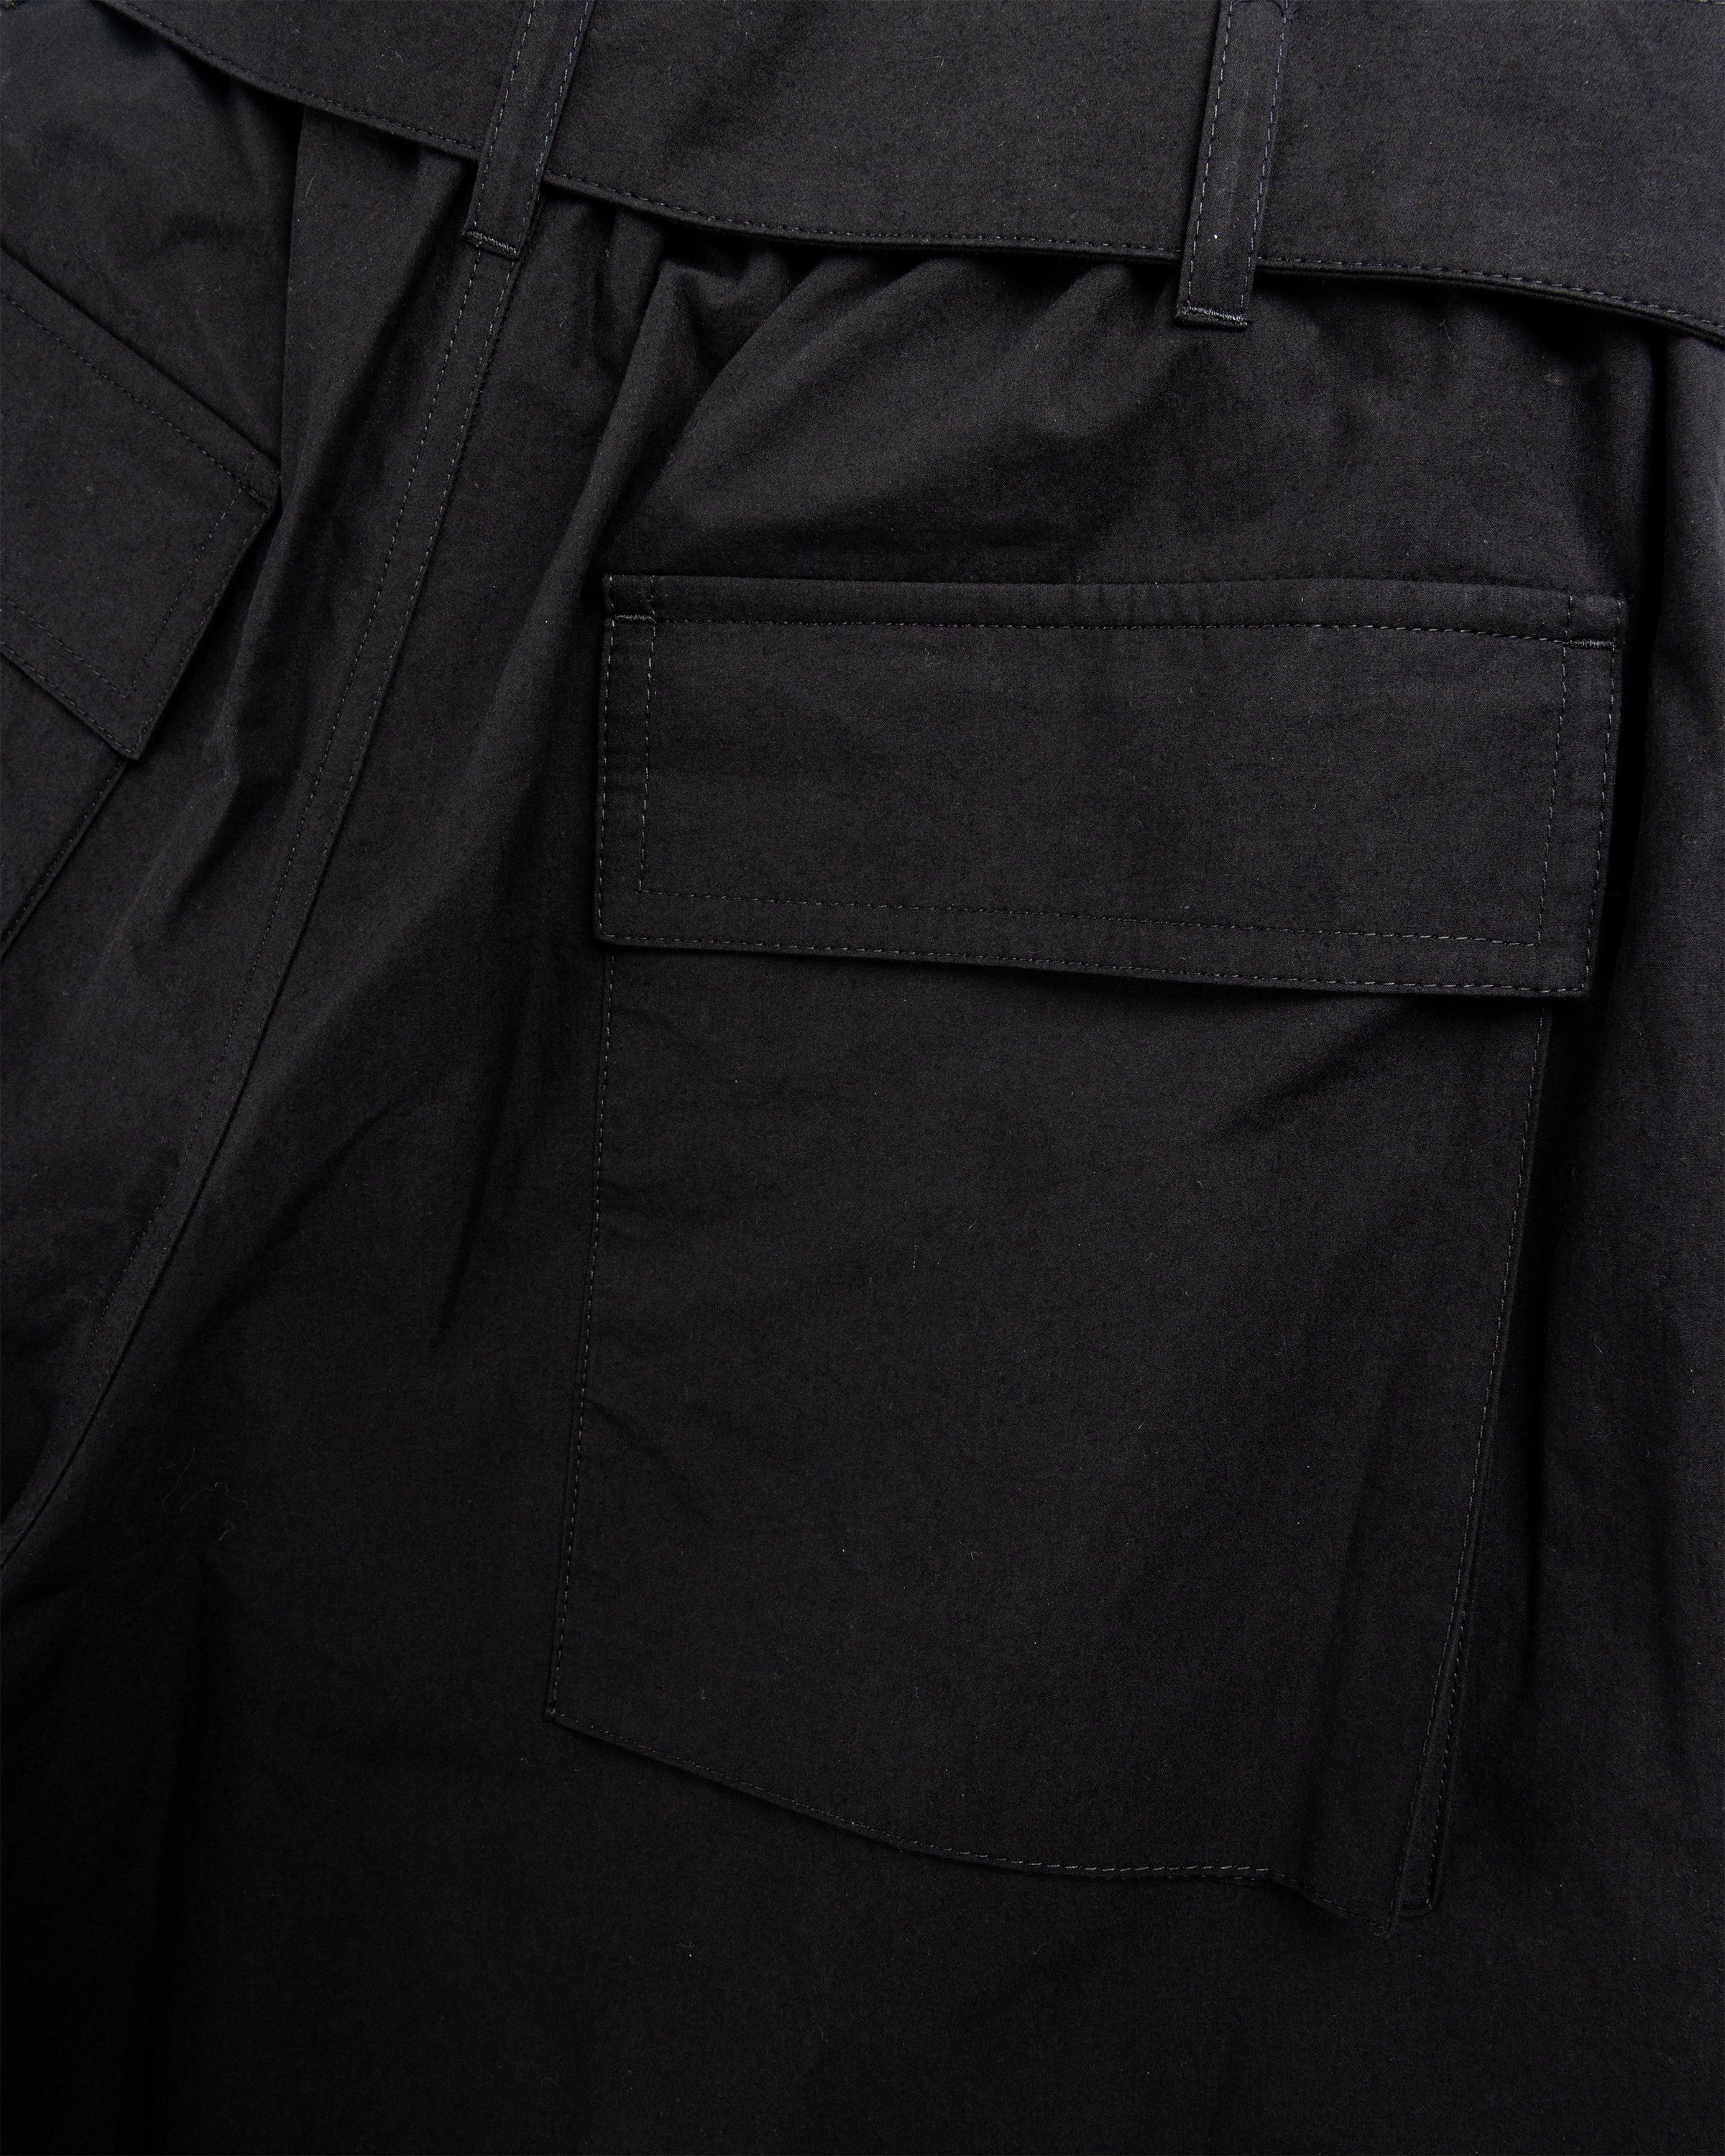 Jil Sander - Trouser 93 - Clothing - Black - Image 7